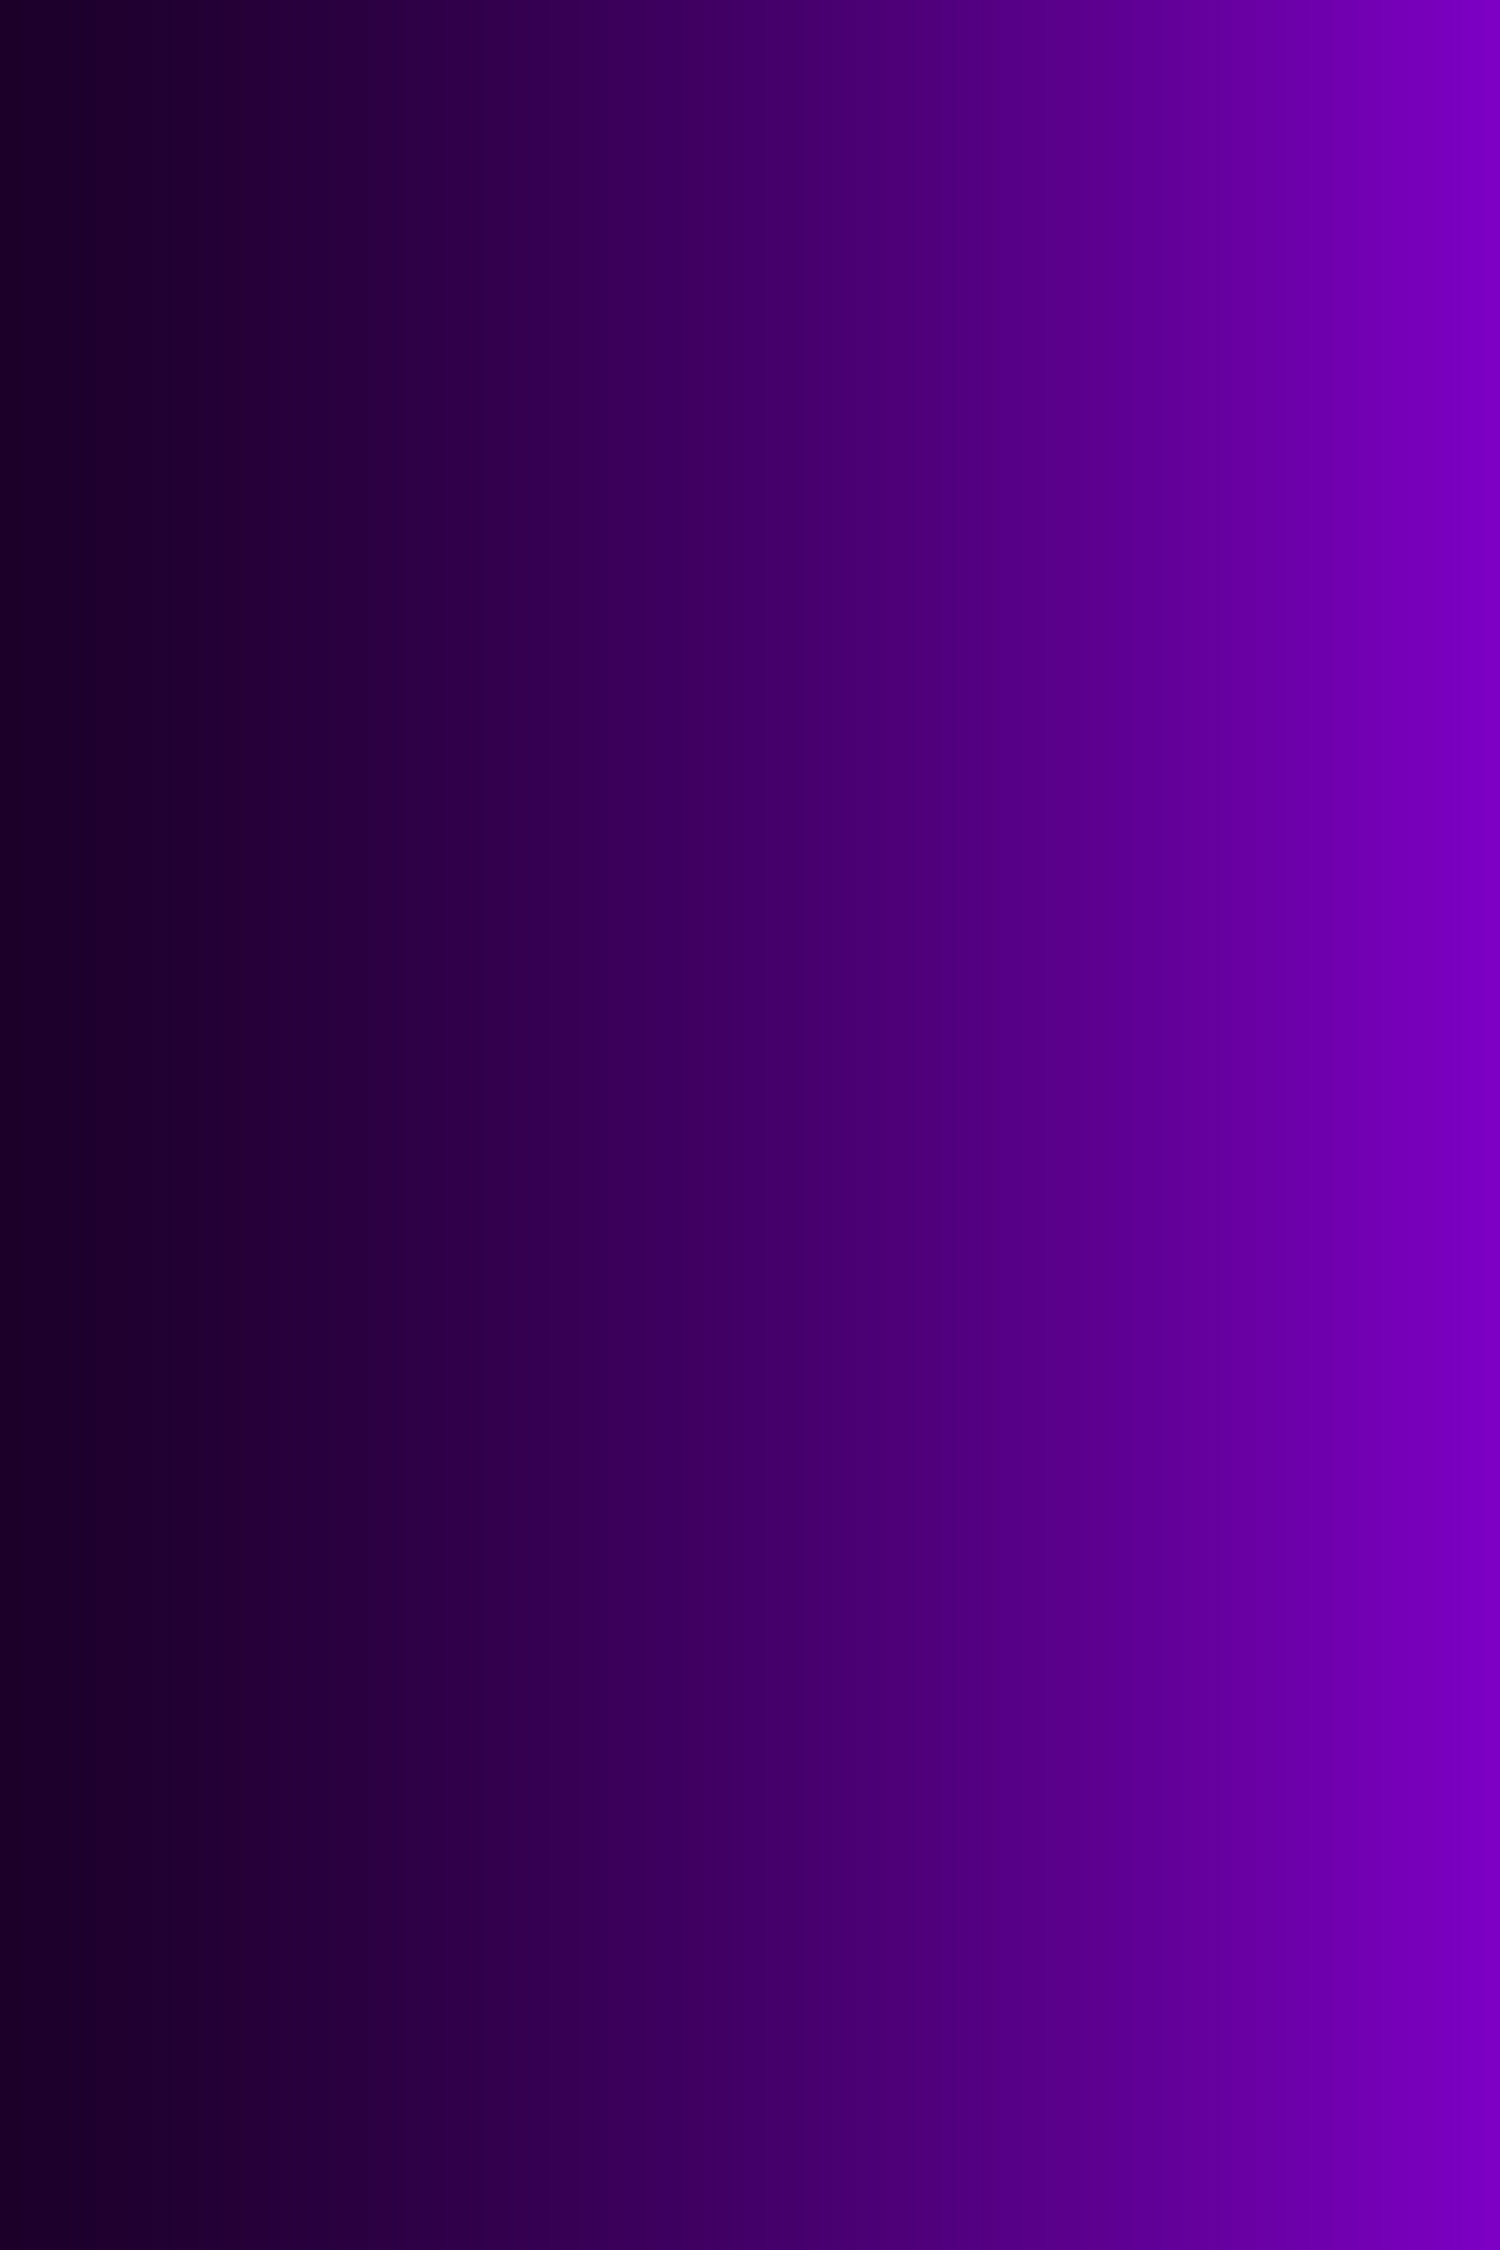 Abstract Purple Gradient Background Vector